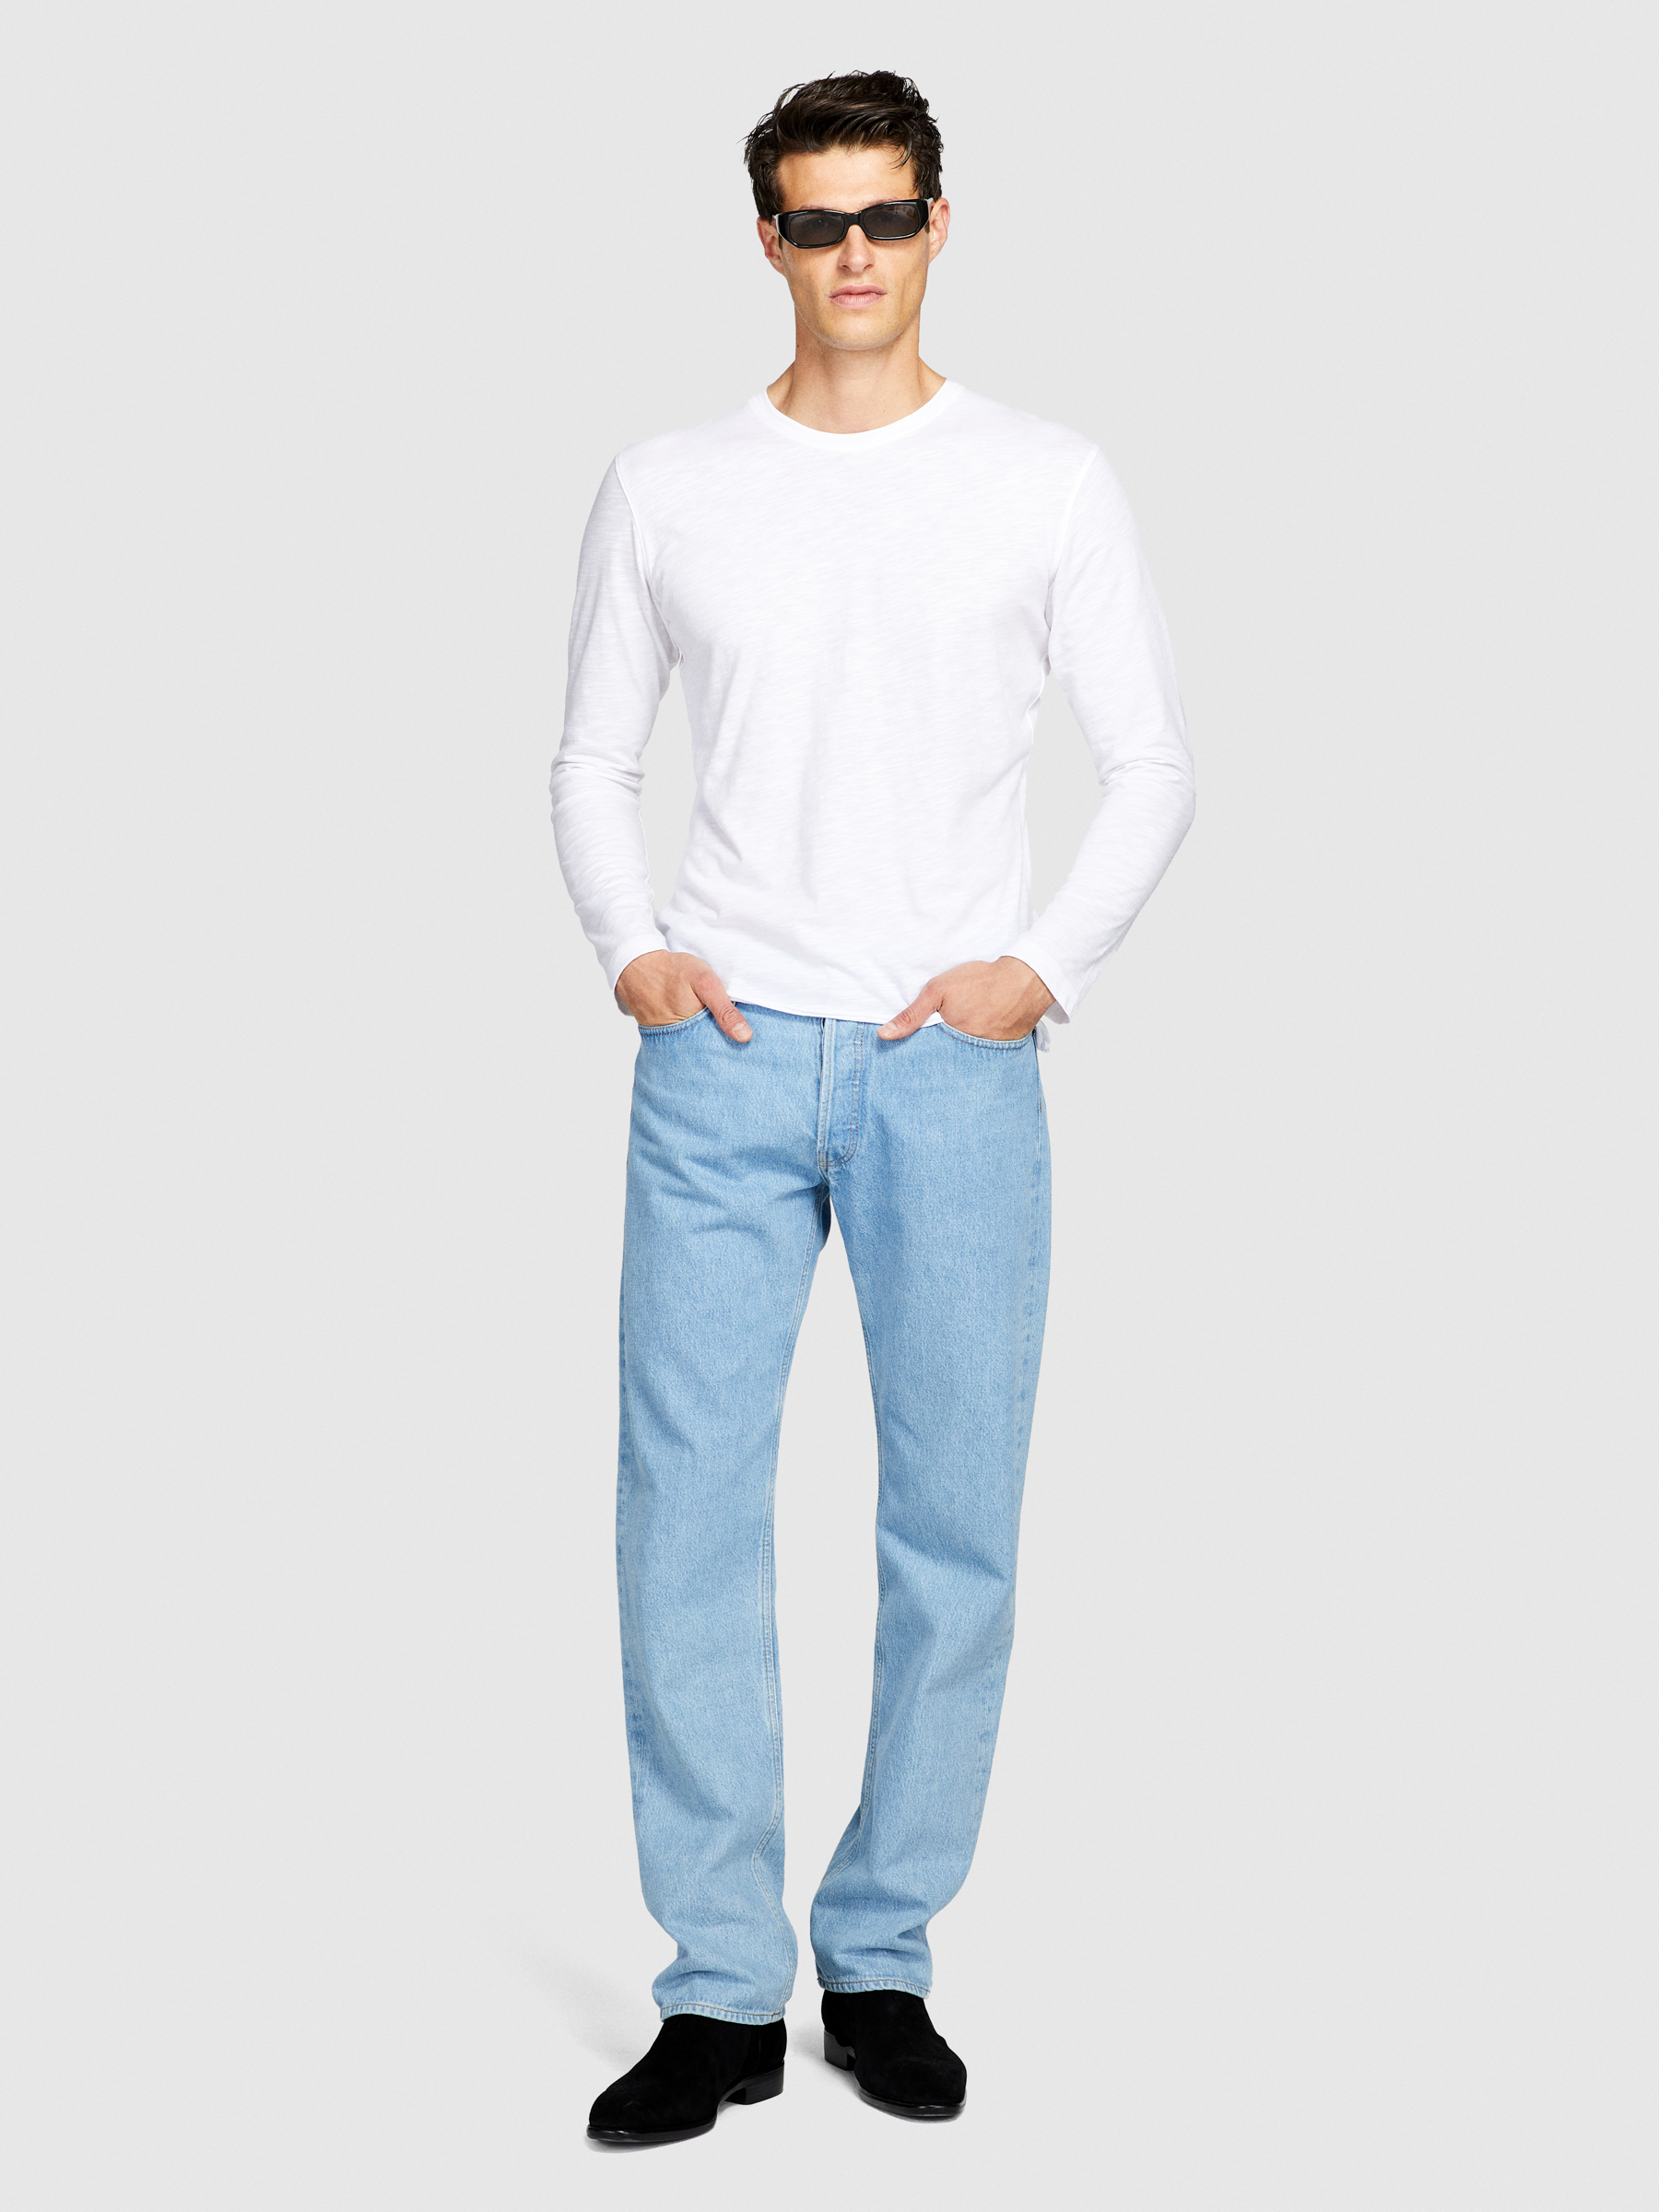 Sisley - Long Sleeve T-shirt, Man, White, Size: M